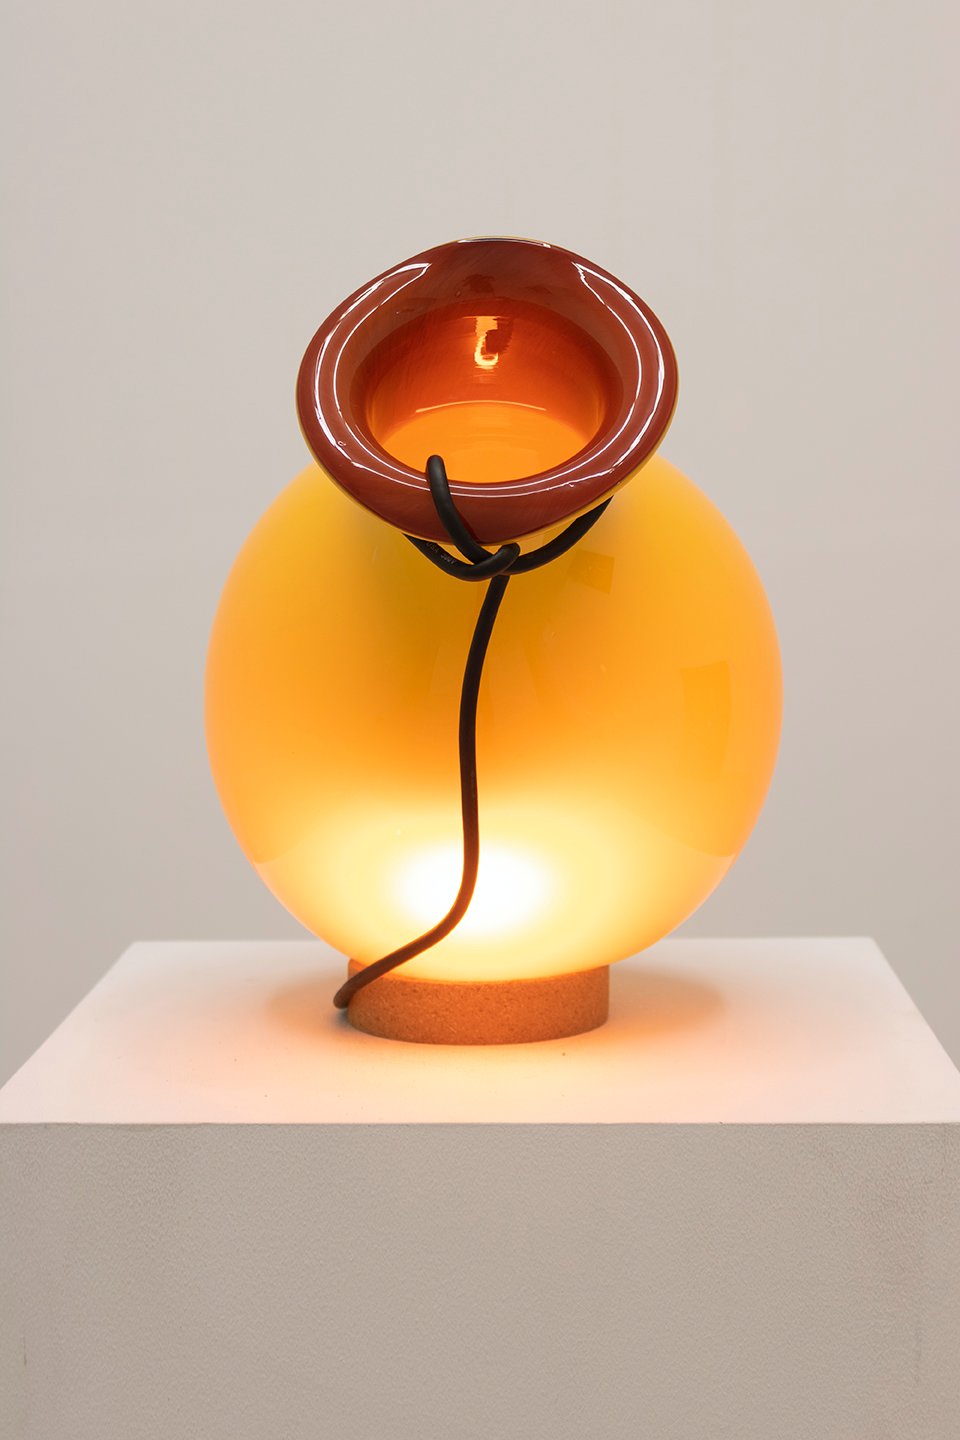 Elias Hansen, Light Sculpture, 2020